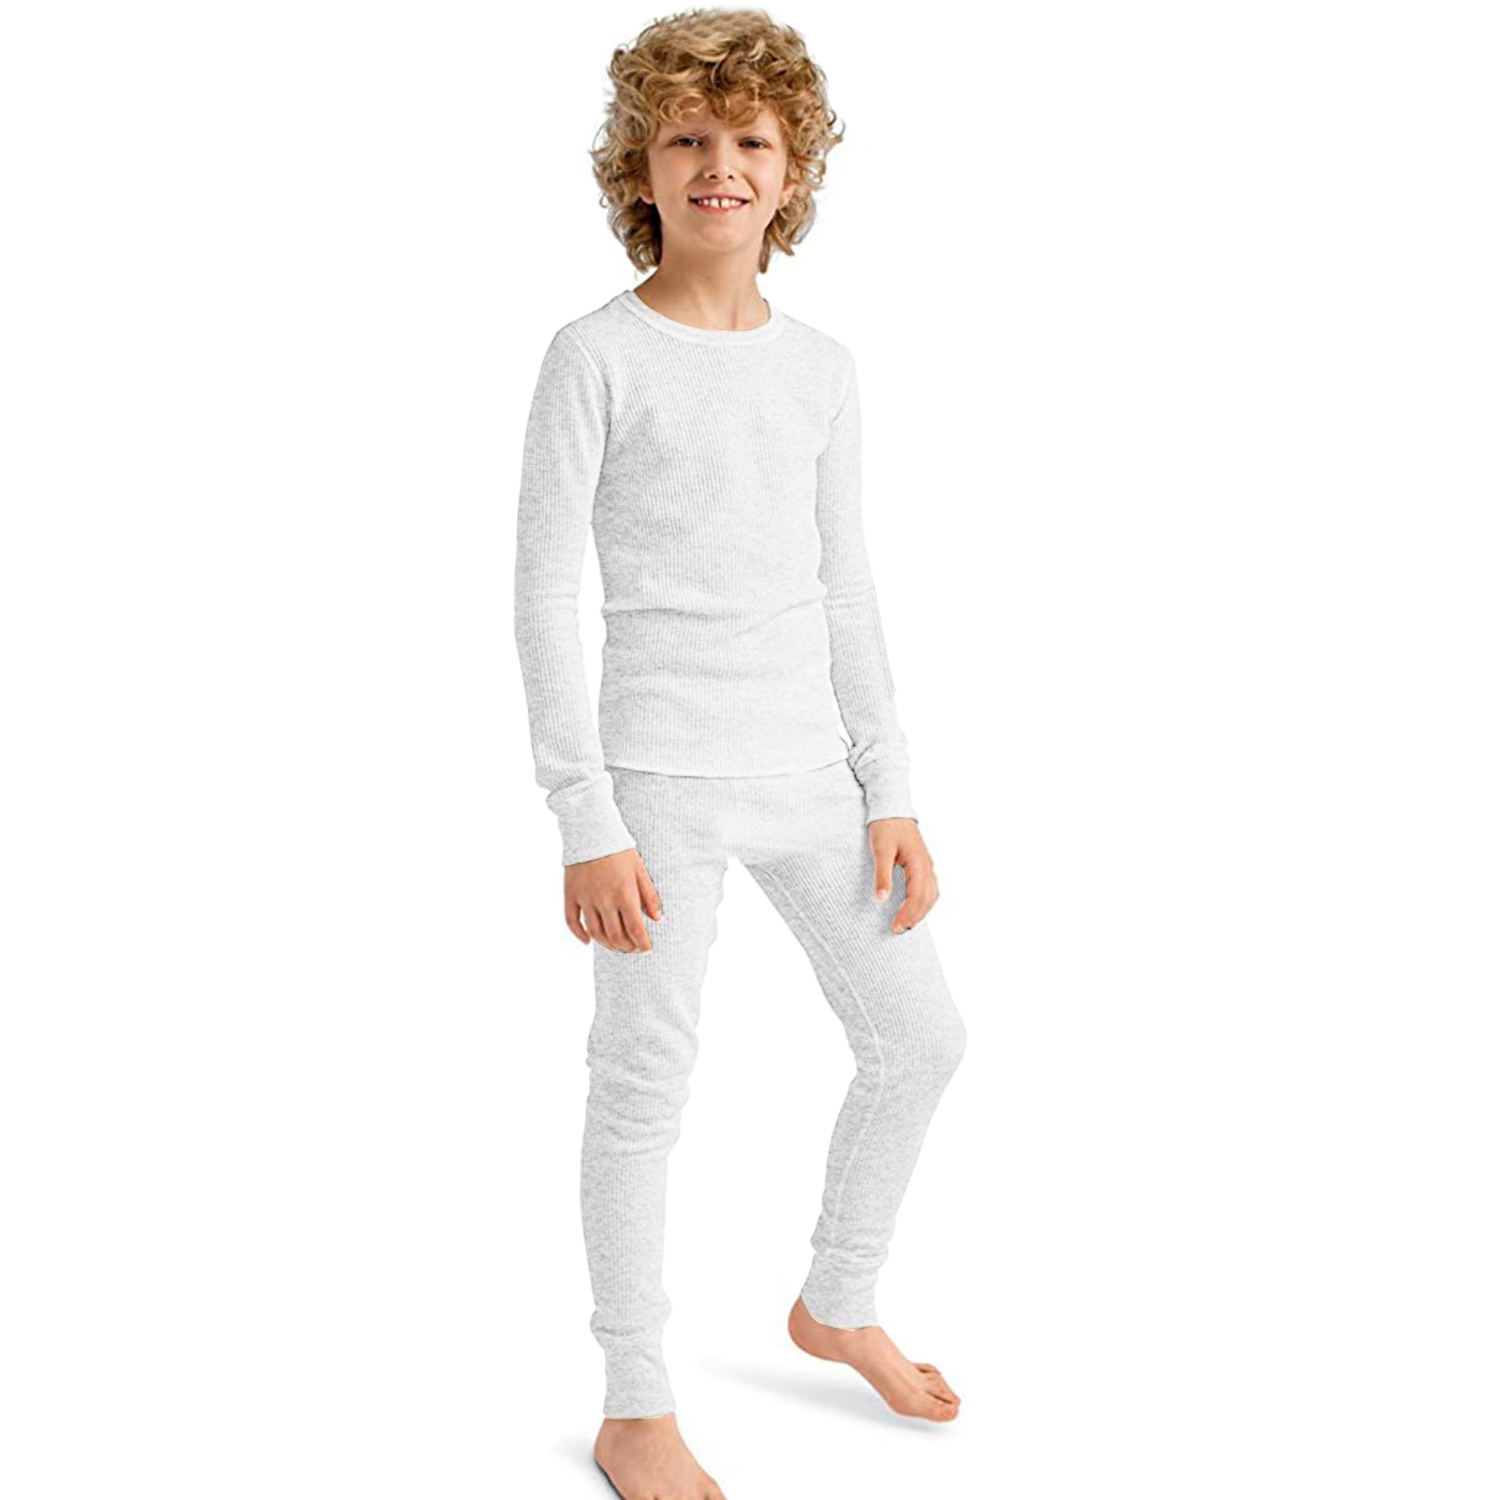 Boy's Cotton Thermal Sets Waffle Knit Long John Underwear Pajama